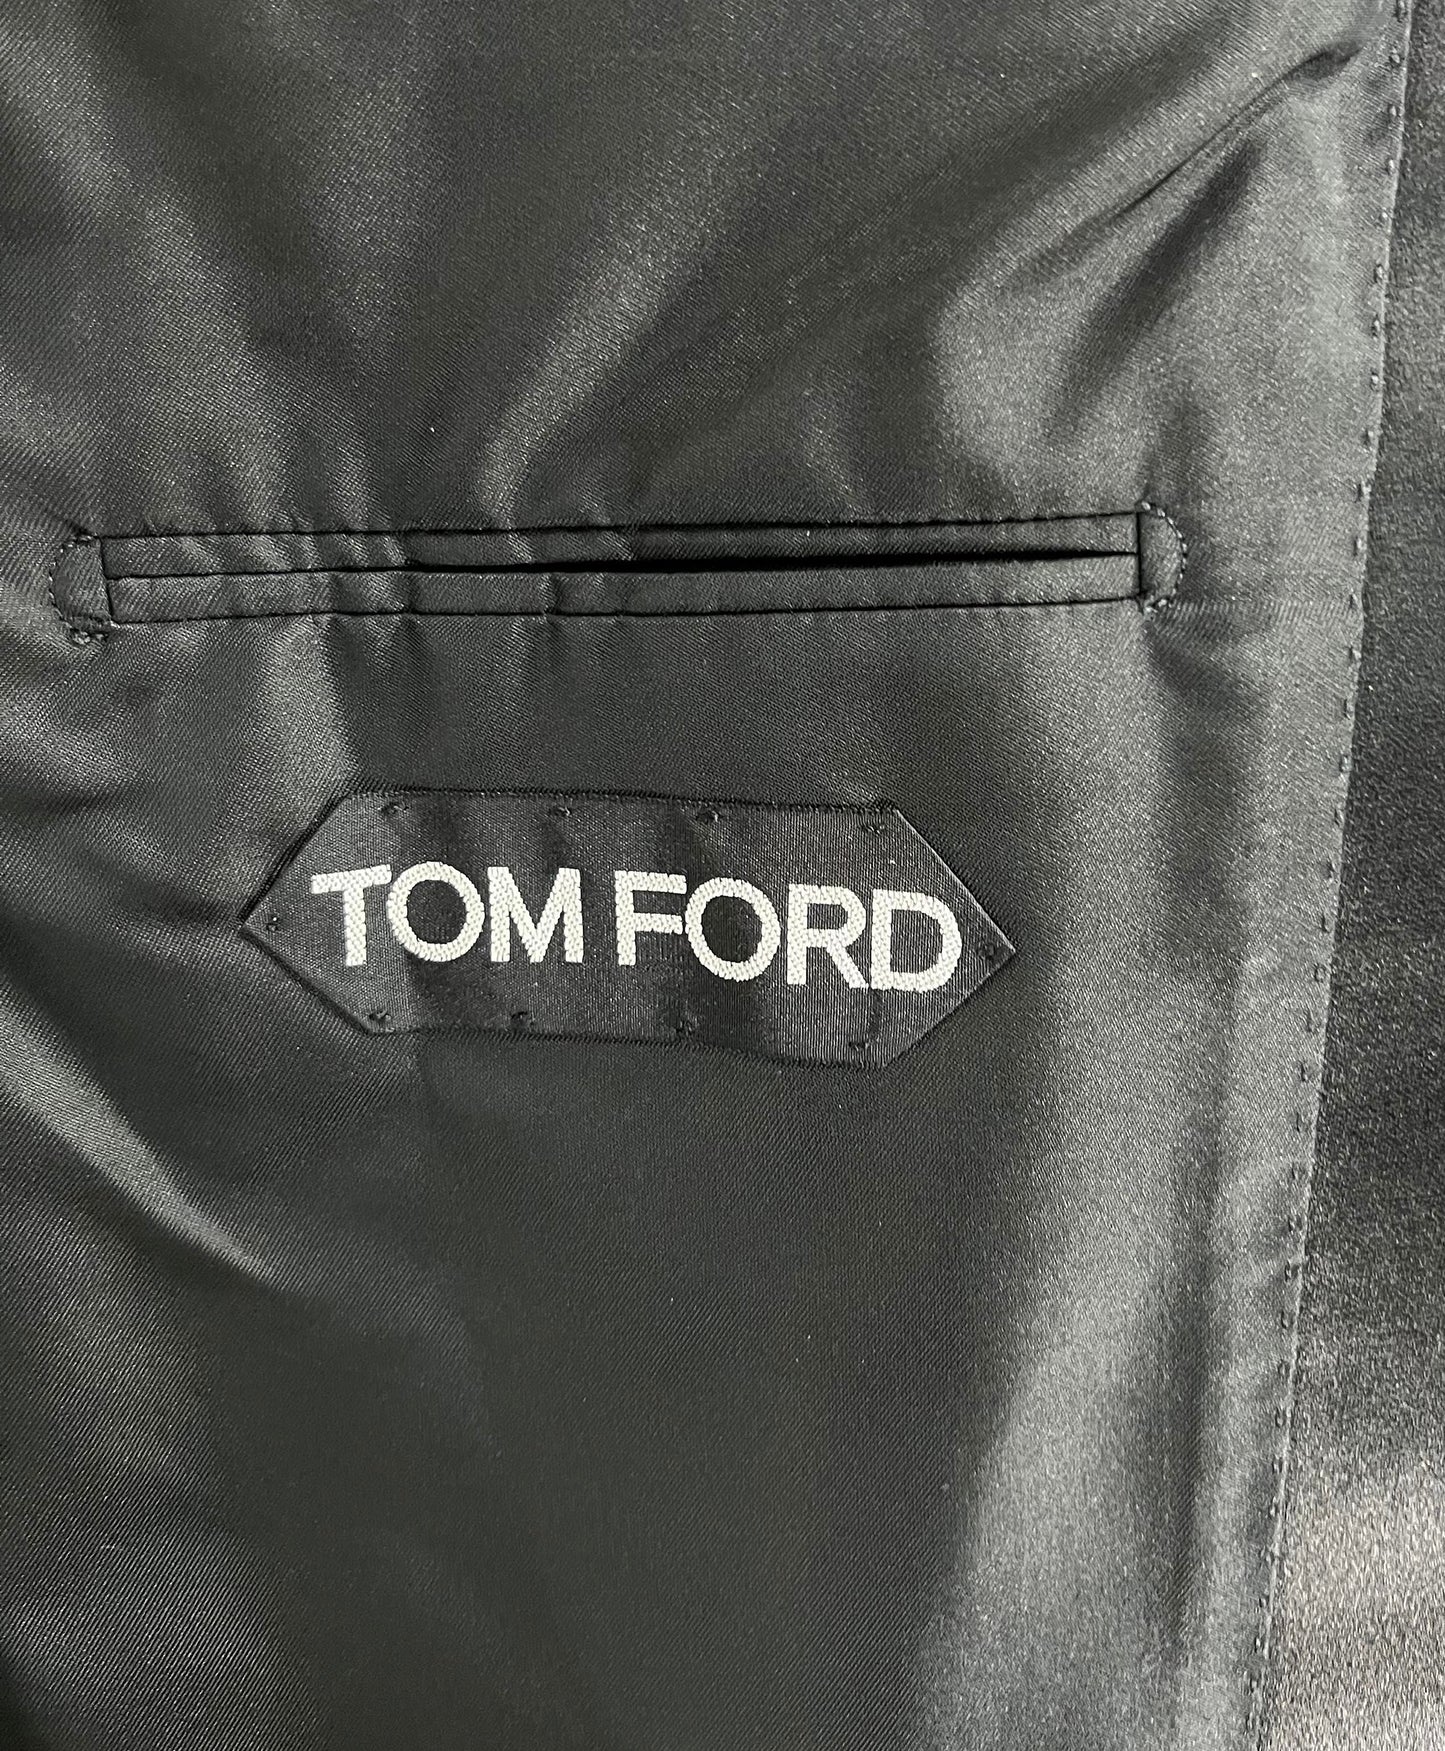 Tom Ford - Wool Tuxedo/Dinner Jacket & Trousers, EU 46R